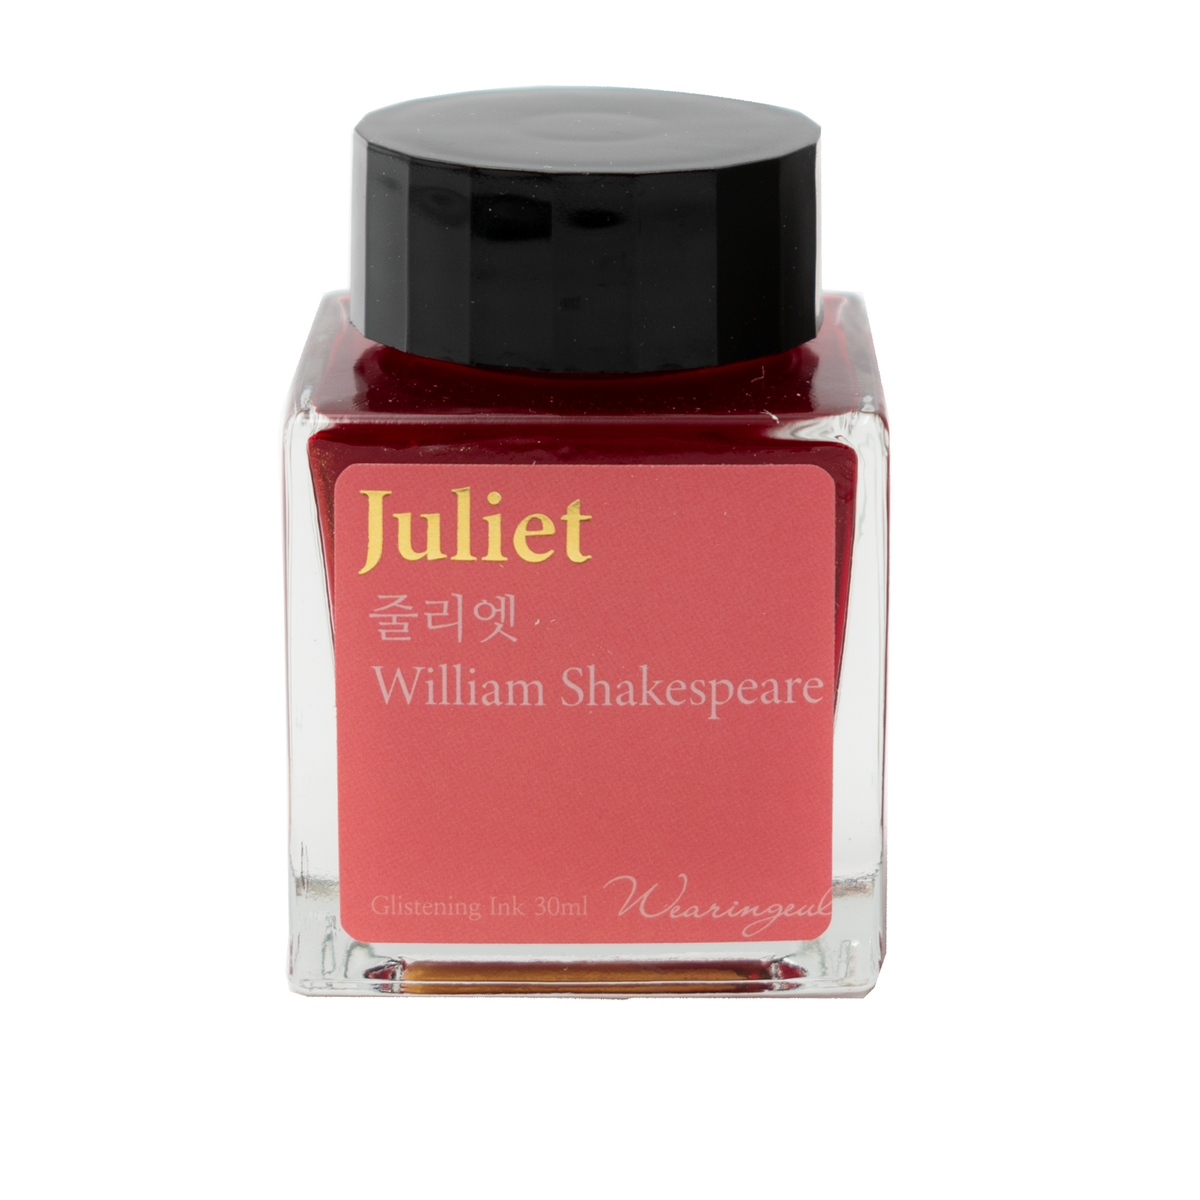 Wearingeul - Monthly World Literature ink Collection - William Shakespeare - Juliet